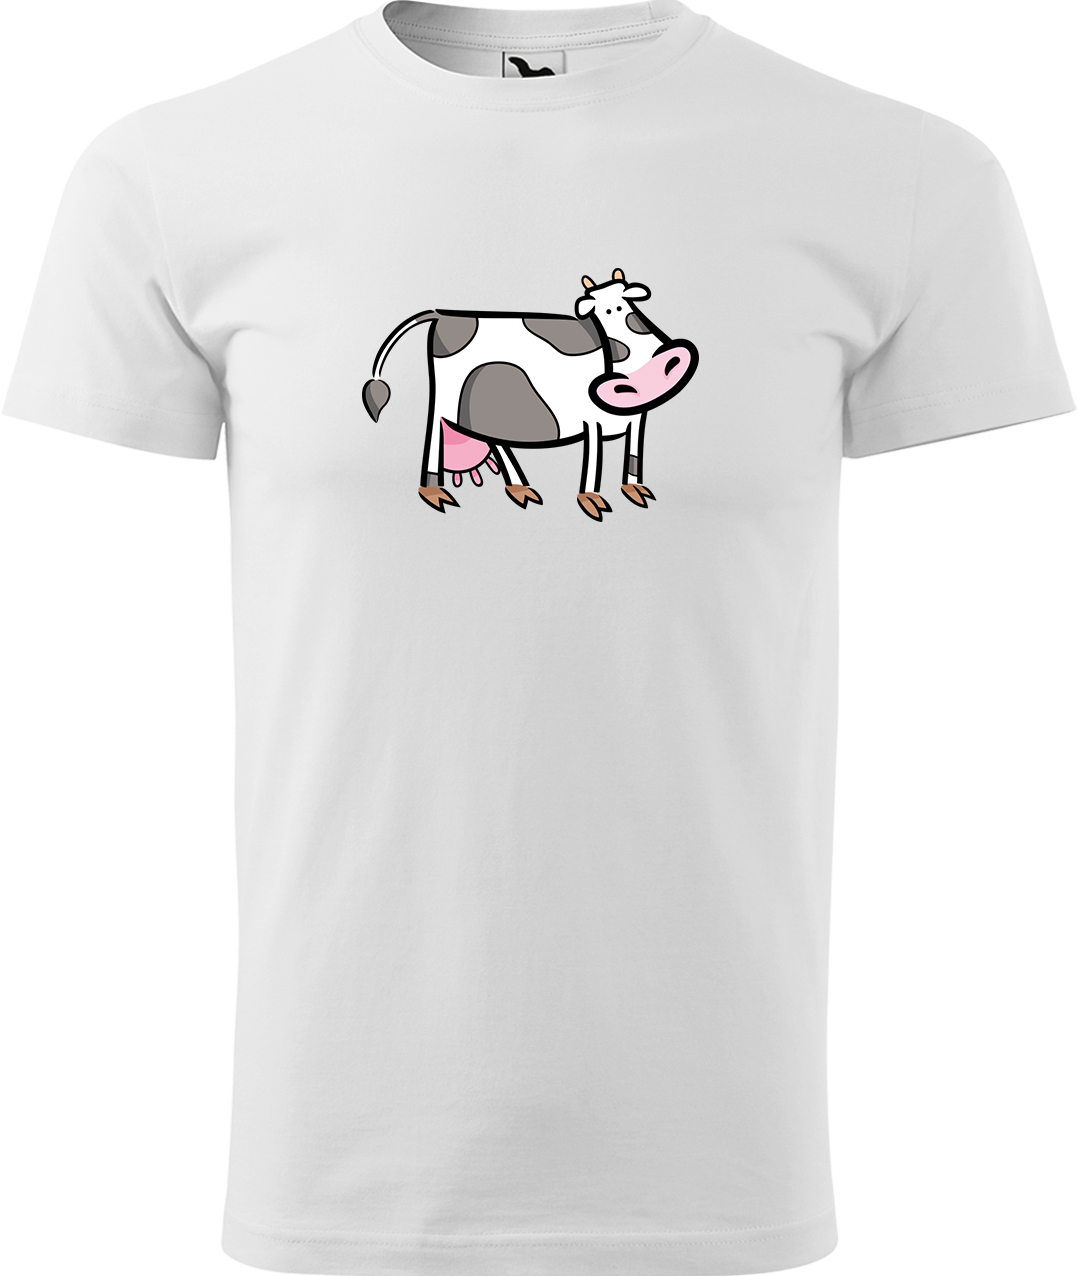 Pánské tričko s krávou - Kravička Velikost: M, Barva: Bílá (00), Střih: pánský